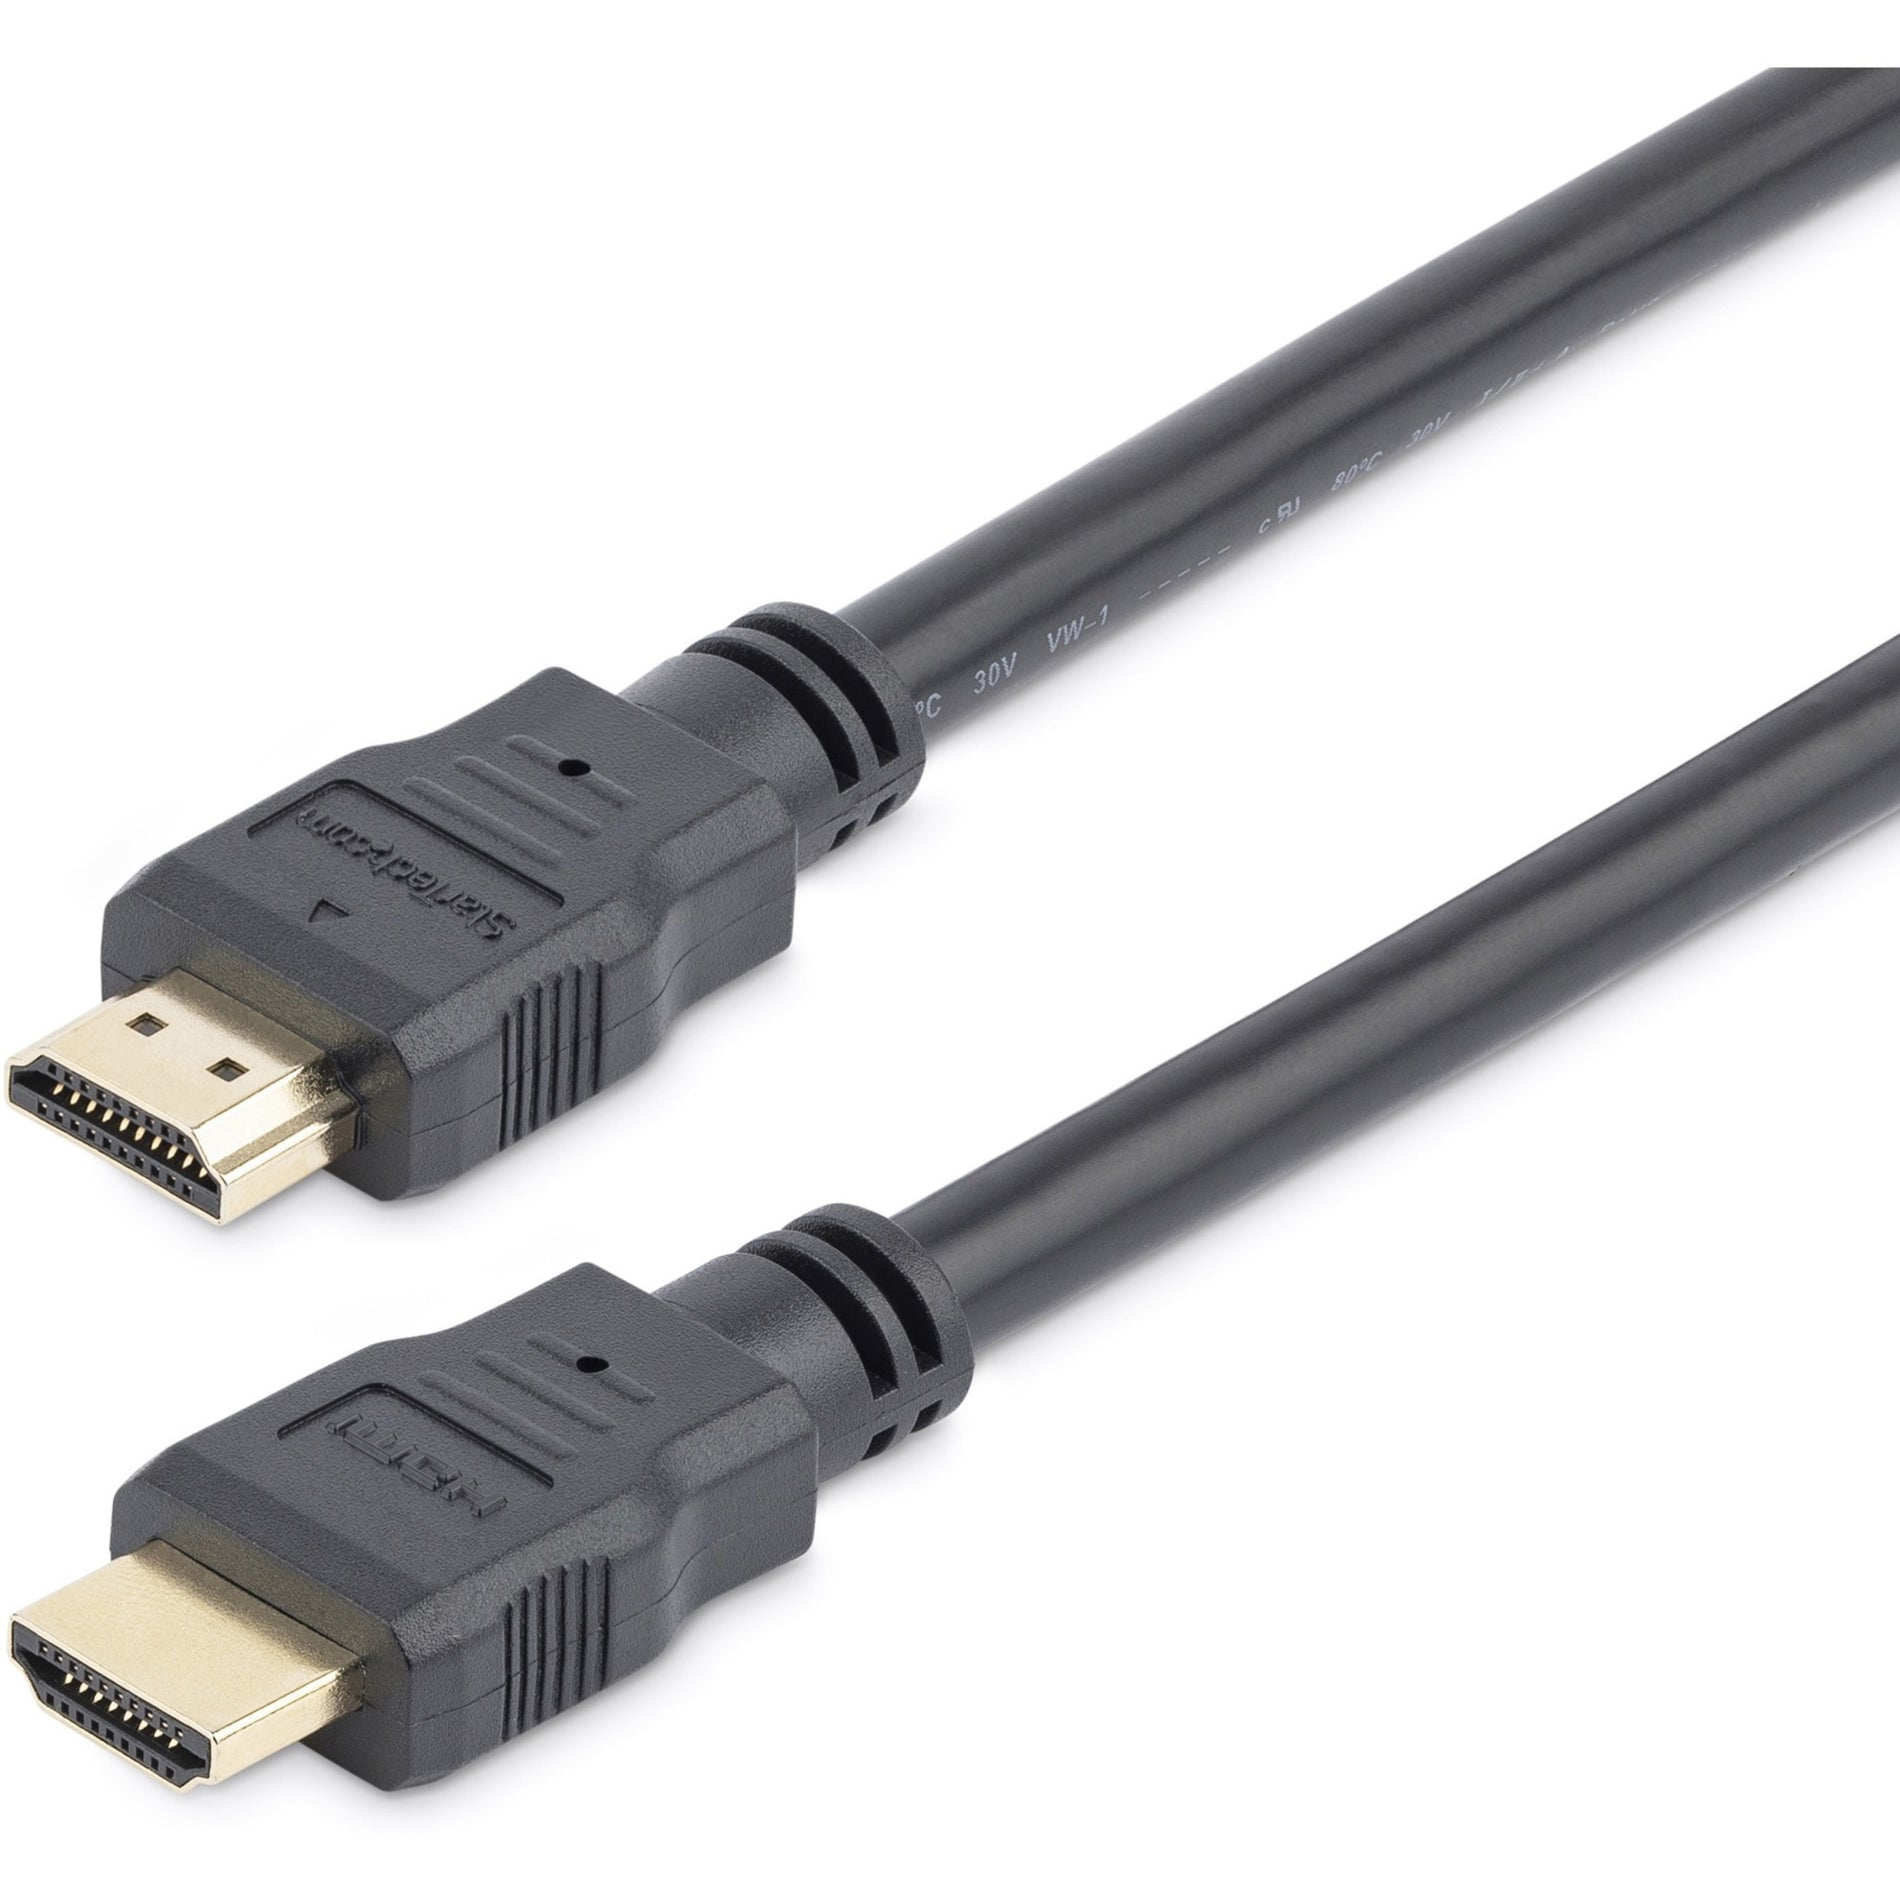 StarTech.com - 高清晰度 HDMI 电缆 HDMM1M - 超高清 4k x 2k HDMI 电缆，模压，耐蚀，防护套，铜导体，屏蔽，3.28英尺，镀金连接器，28 AWG，支持 3840 x 2160 分辨率，黑色